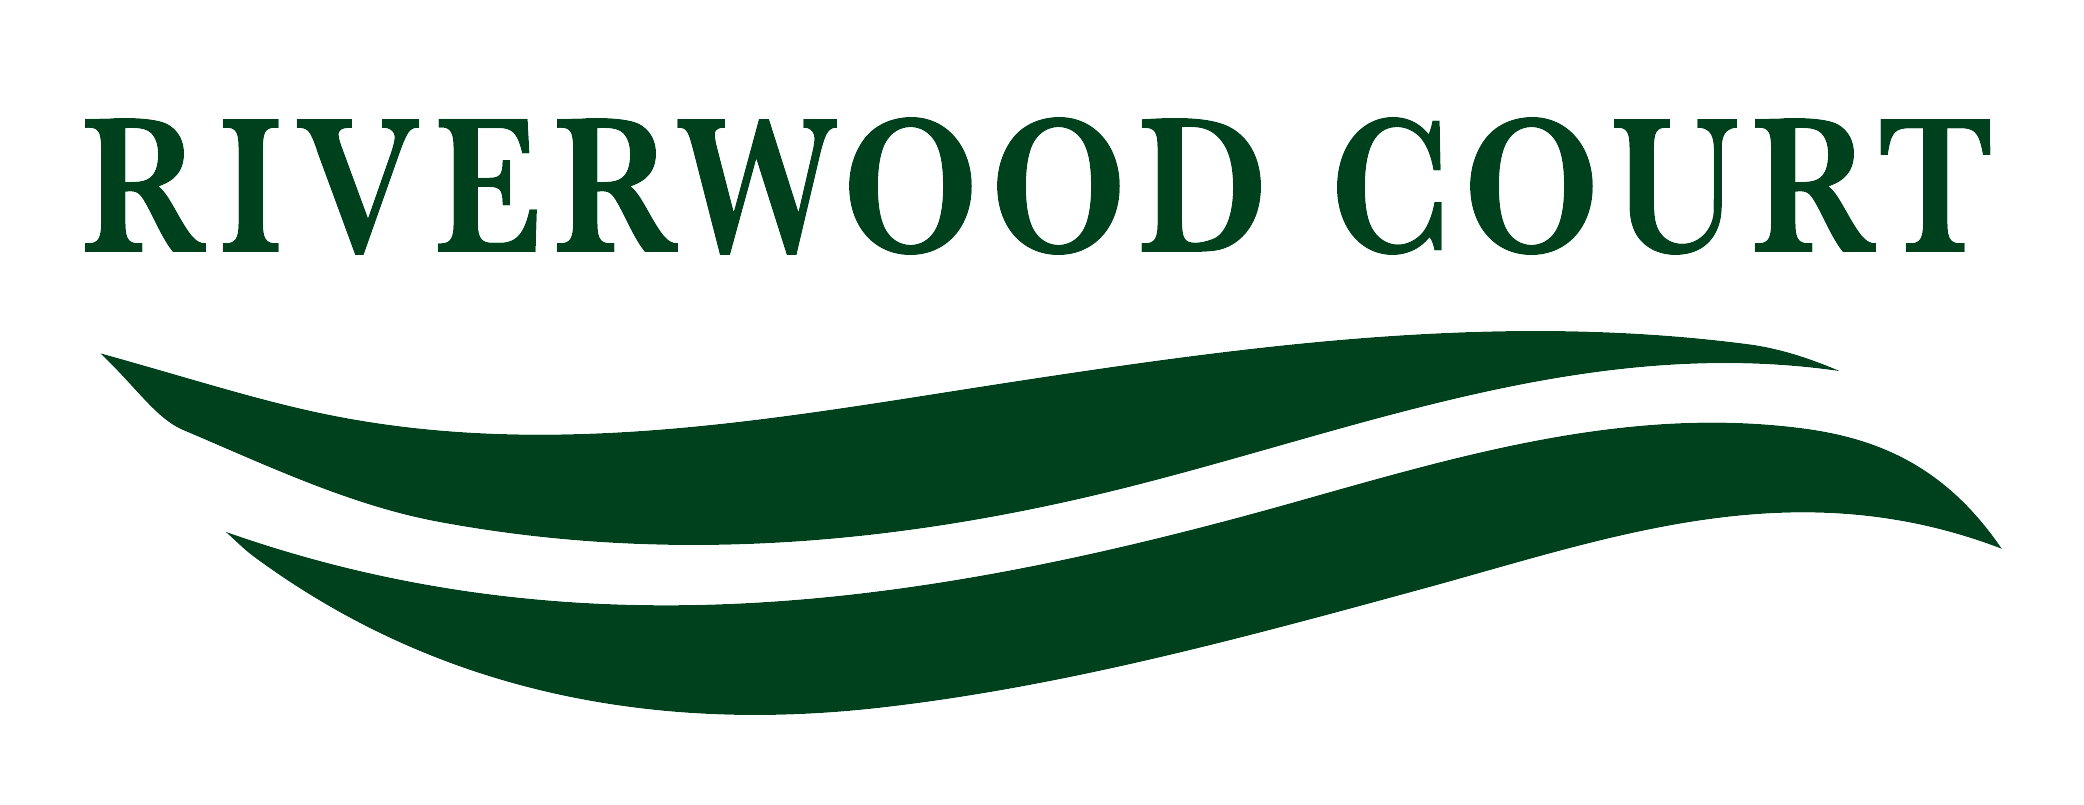 Riverwood Court-Green logo